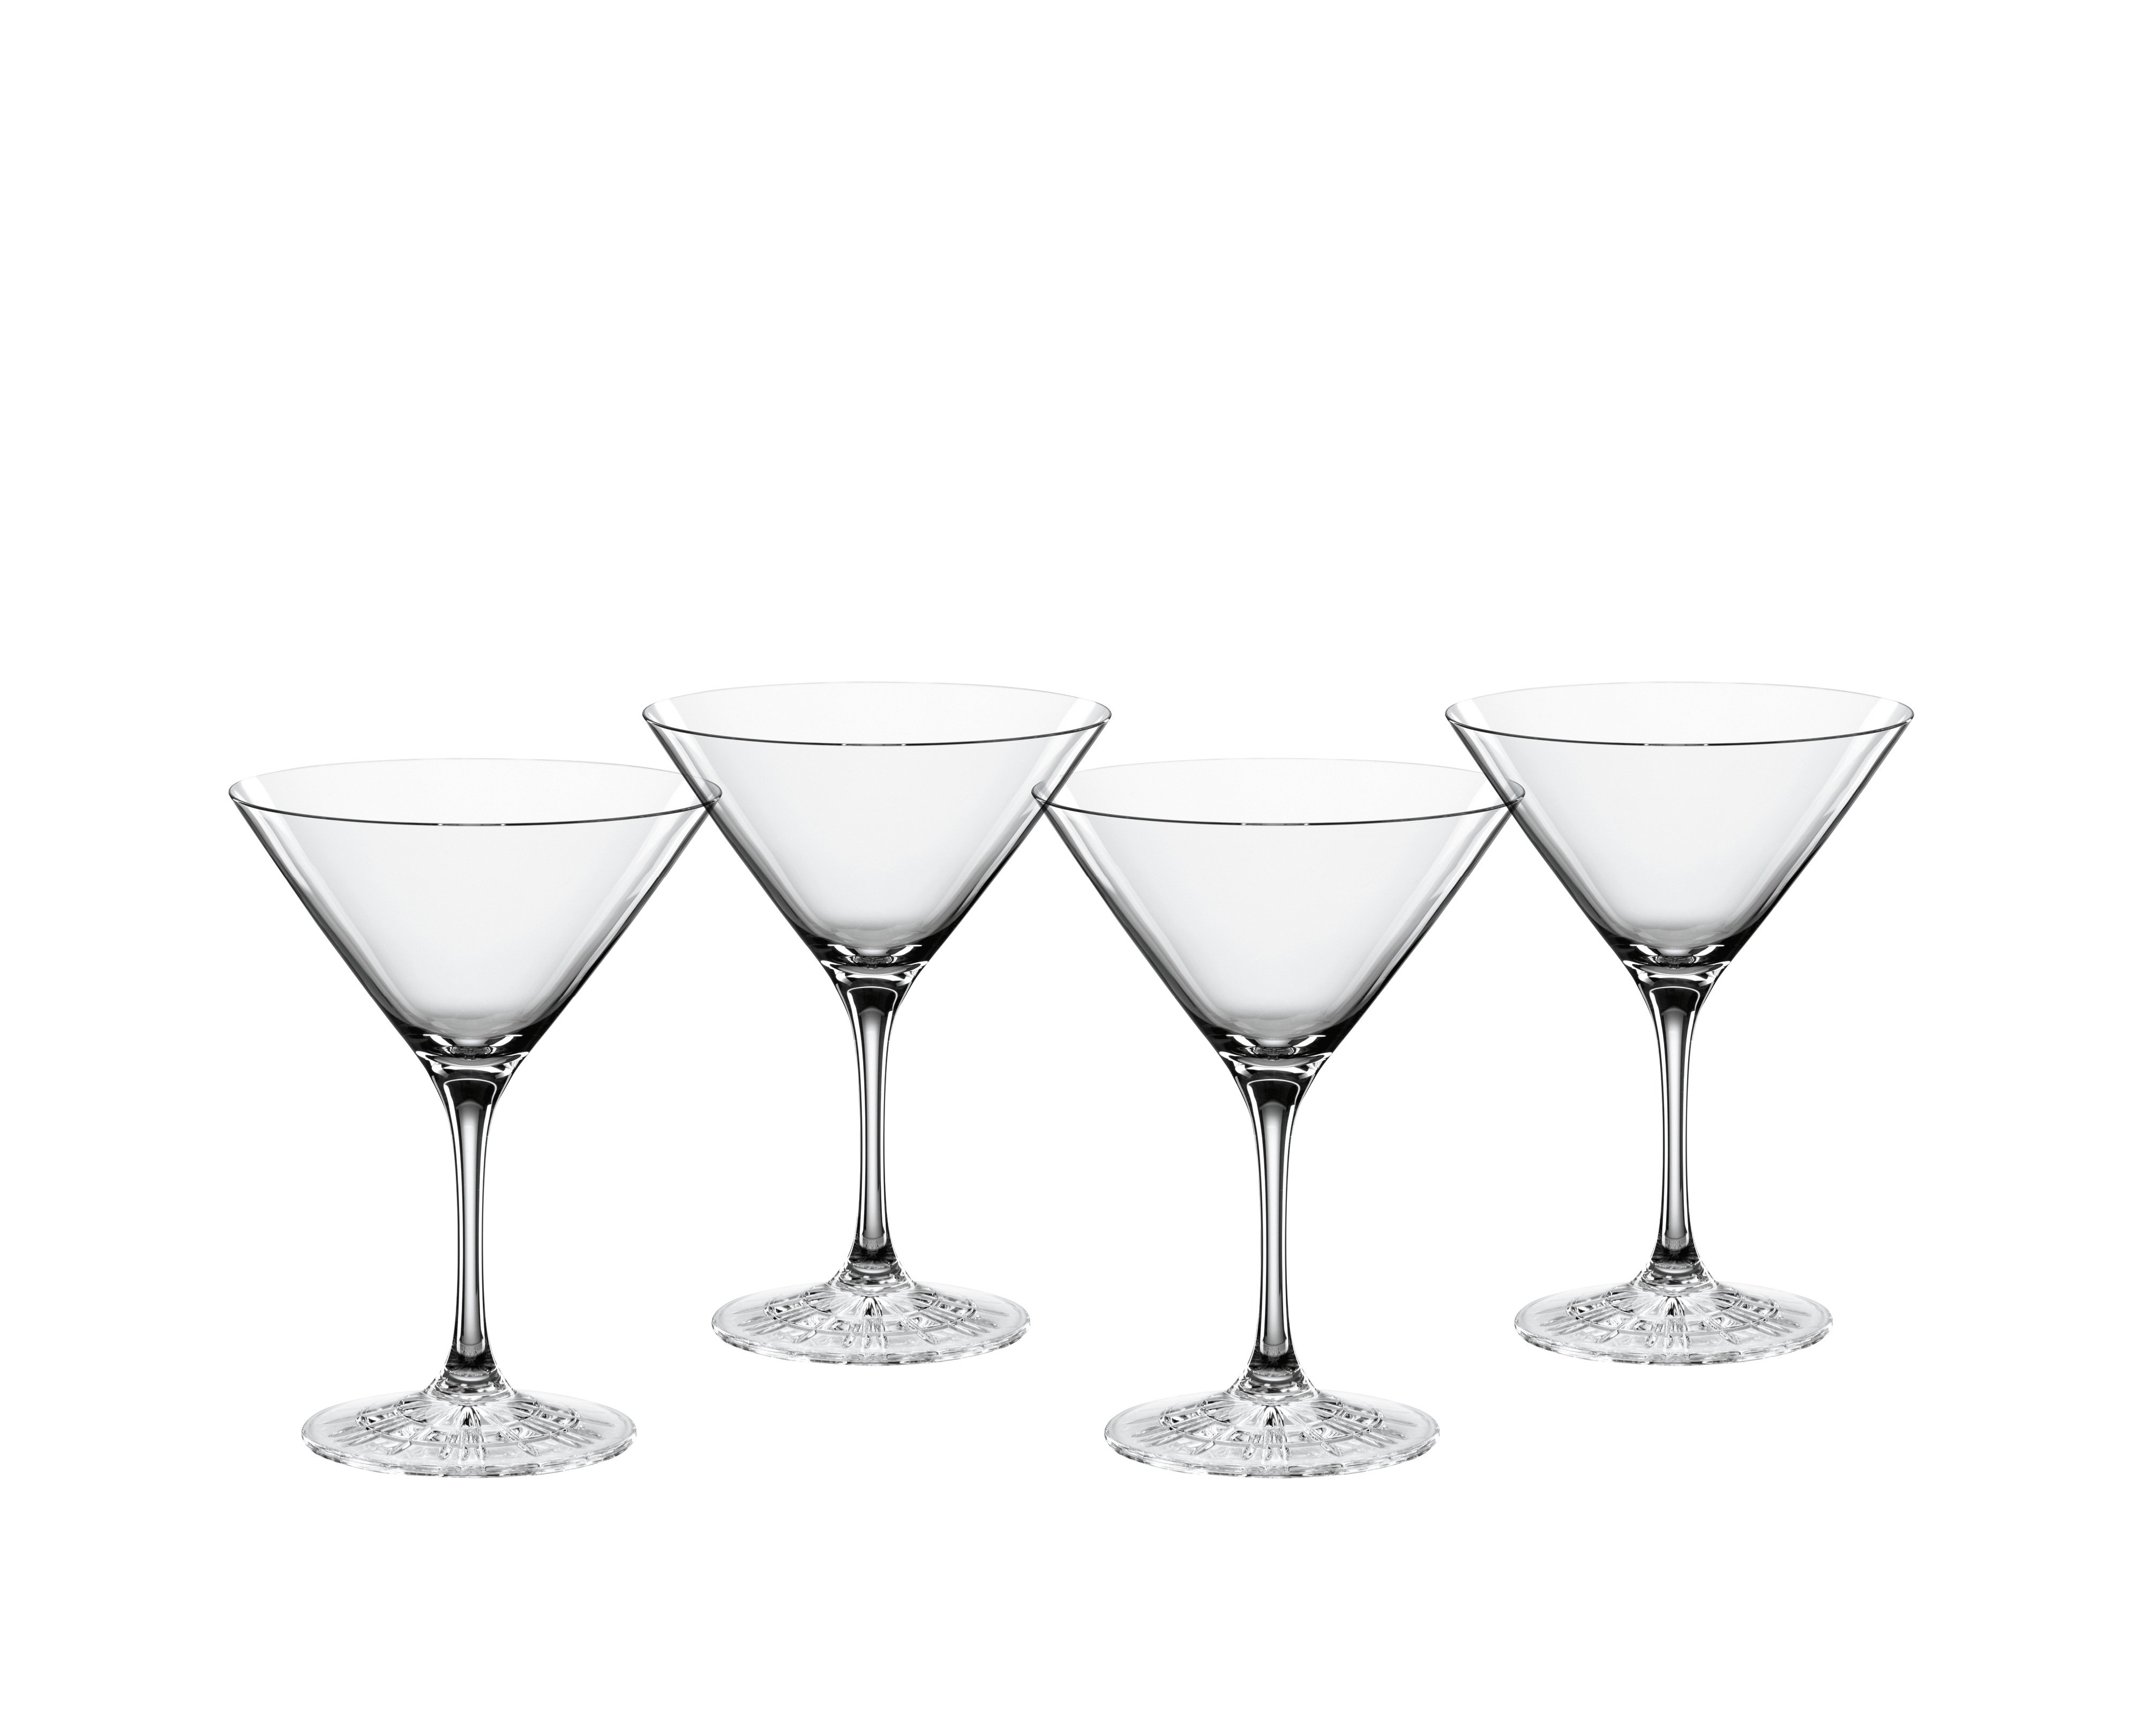 Spiegelau Large martini glass (set of 4)